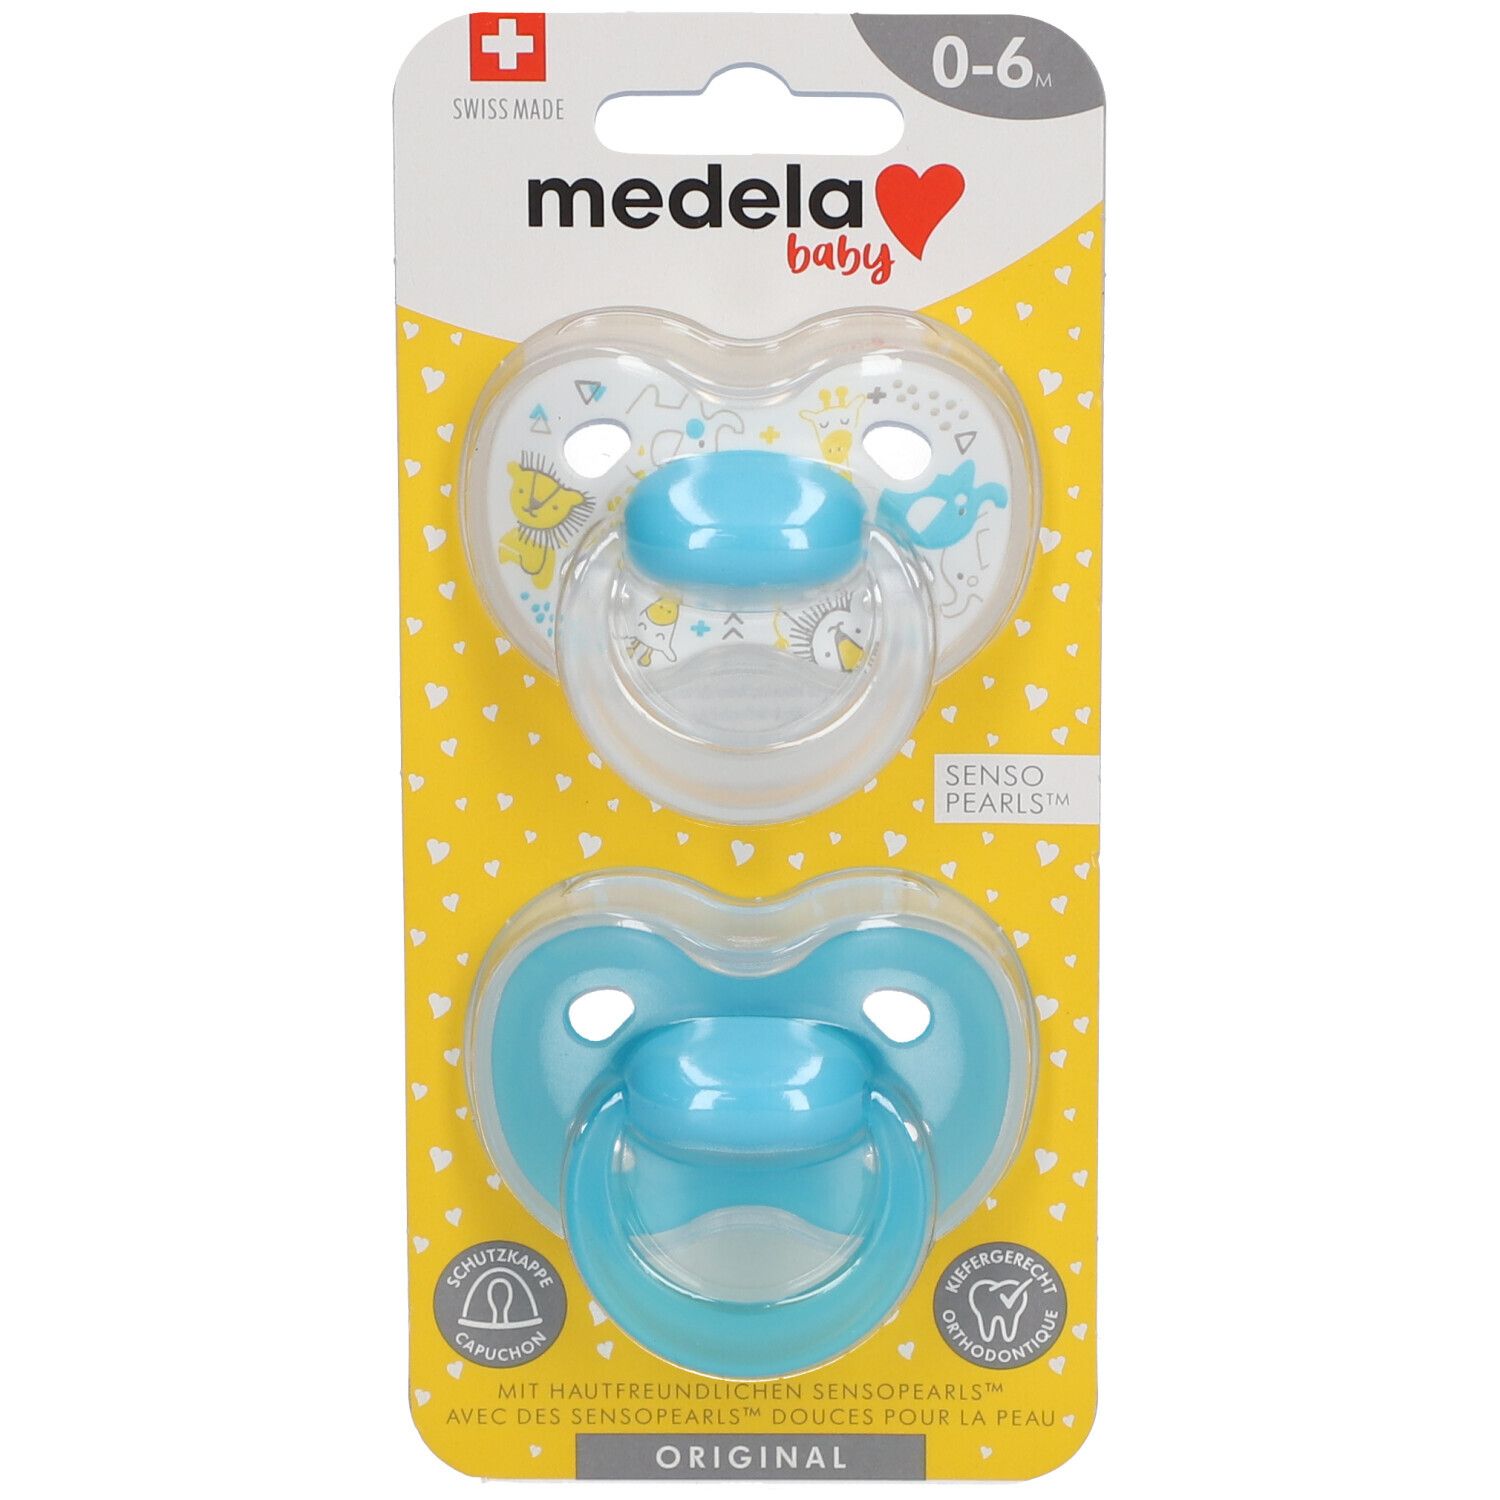 Medela Baby Original Sucette Turquoise 0-6 Mois DUO 2 tétine